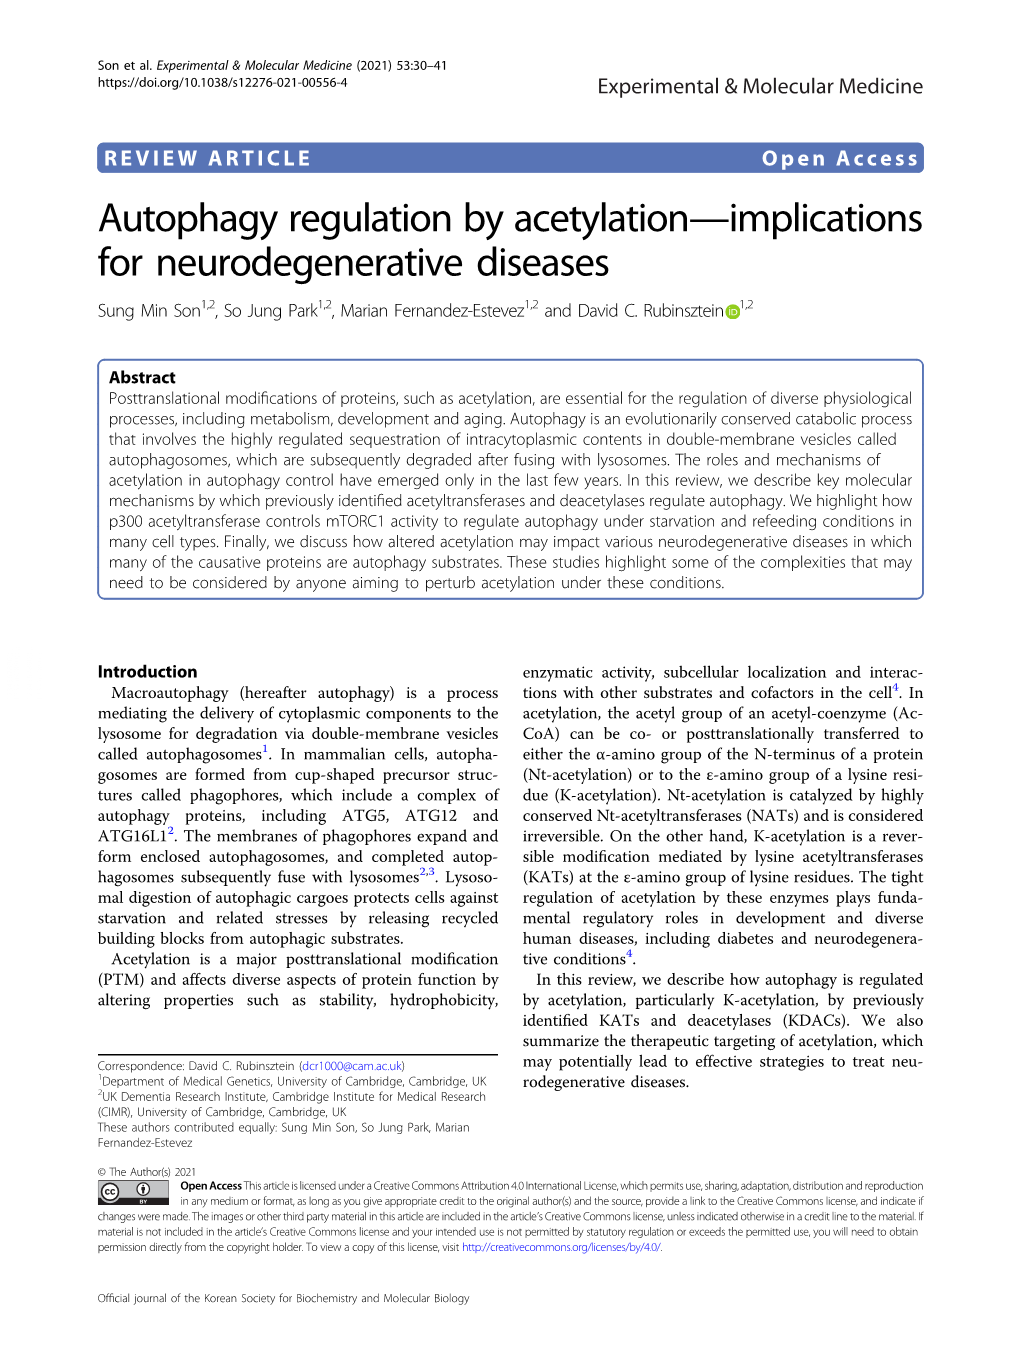 Autophagy Regulation by Acetylation—Implications for Neurodegenerative Diseases Sung Min Son1,2,Sojungpark1,2, Marian Fernandez-Estevez1,2 and David C